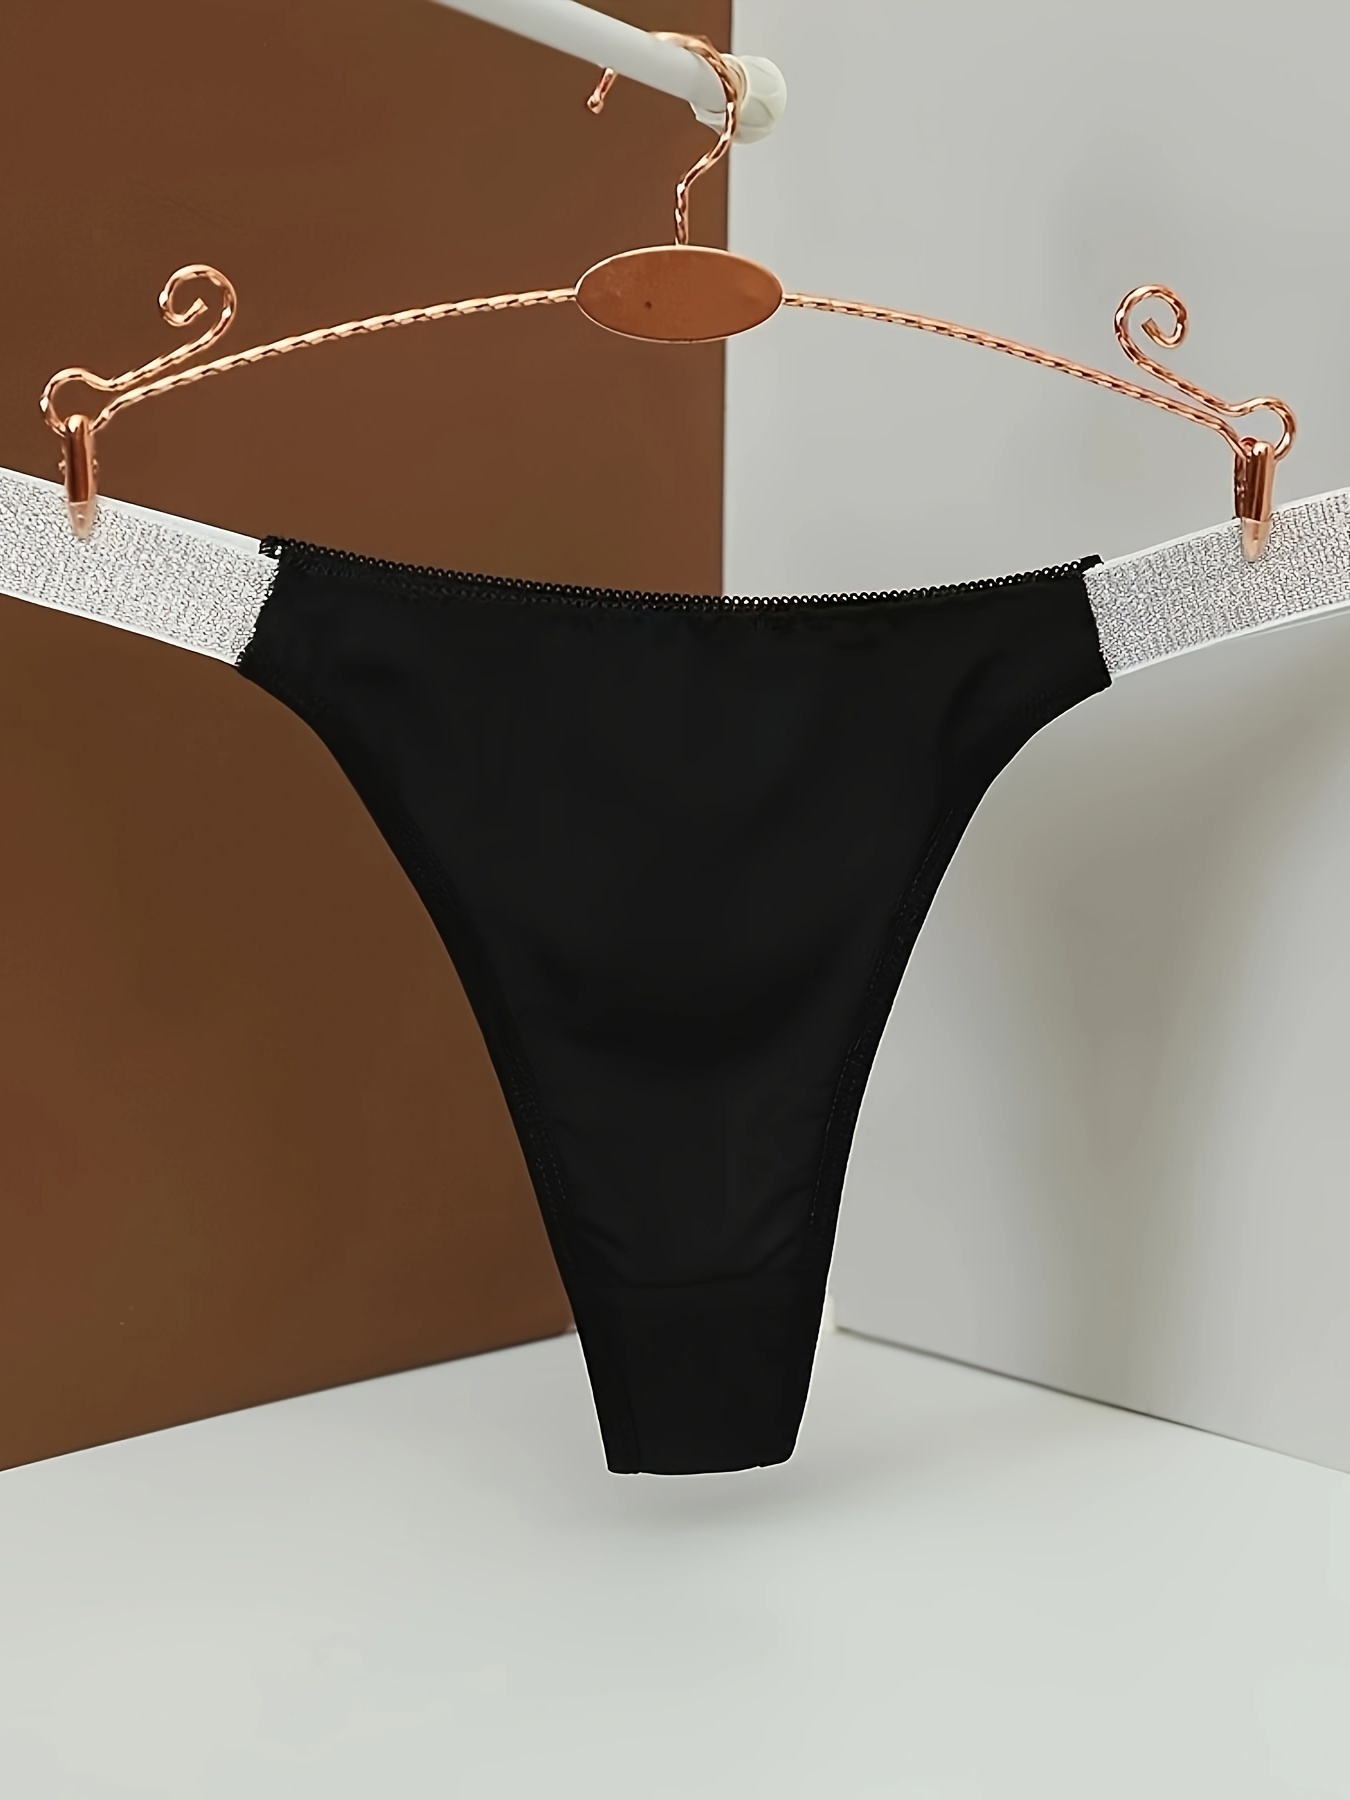 Tongs-Shop 1PC Men's Bikini Homme Sexy Lingerie Underwear Thong Men Briefs  Underpants G String T-Back Jockstrap Seamless Breathable